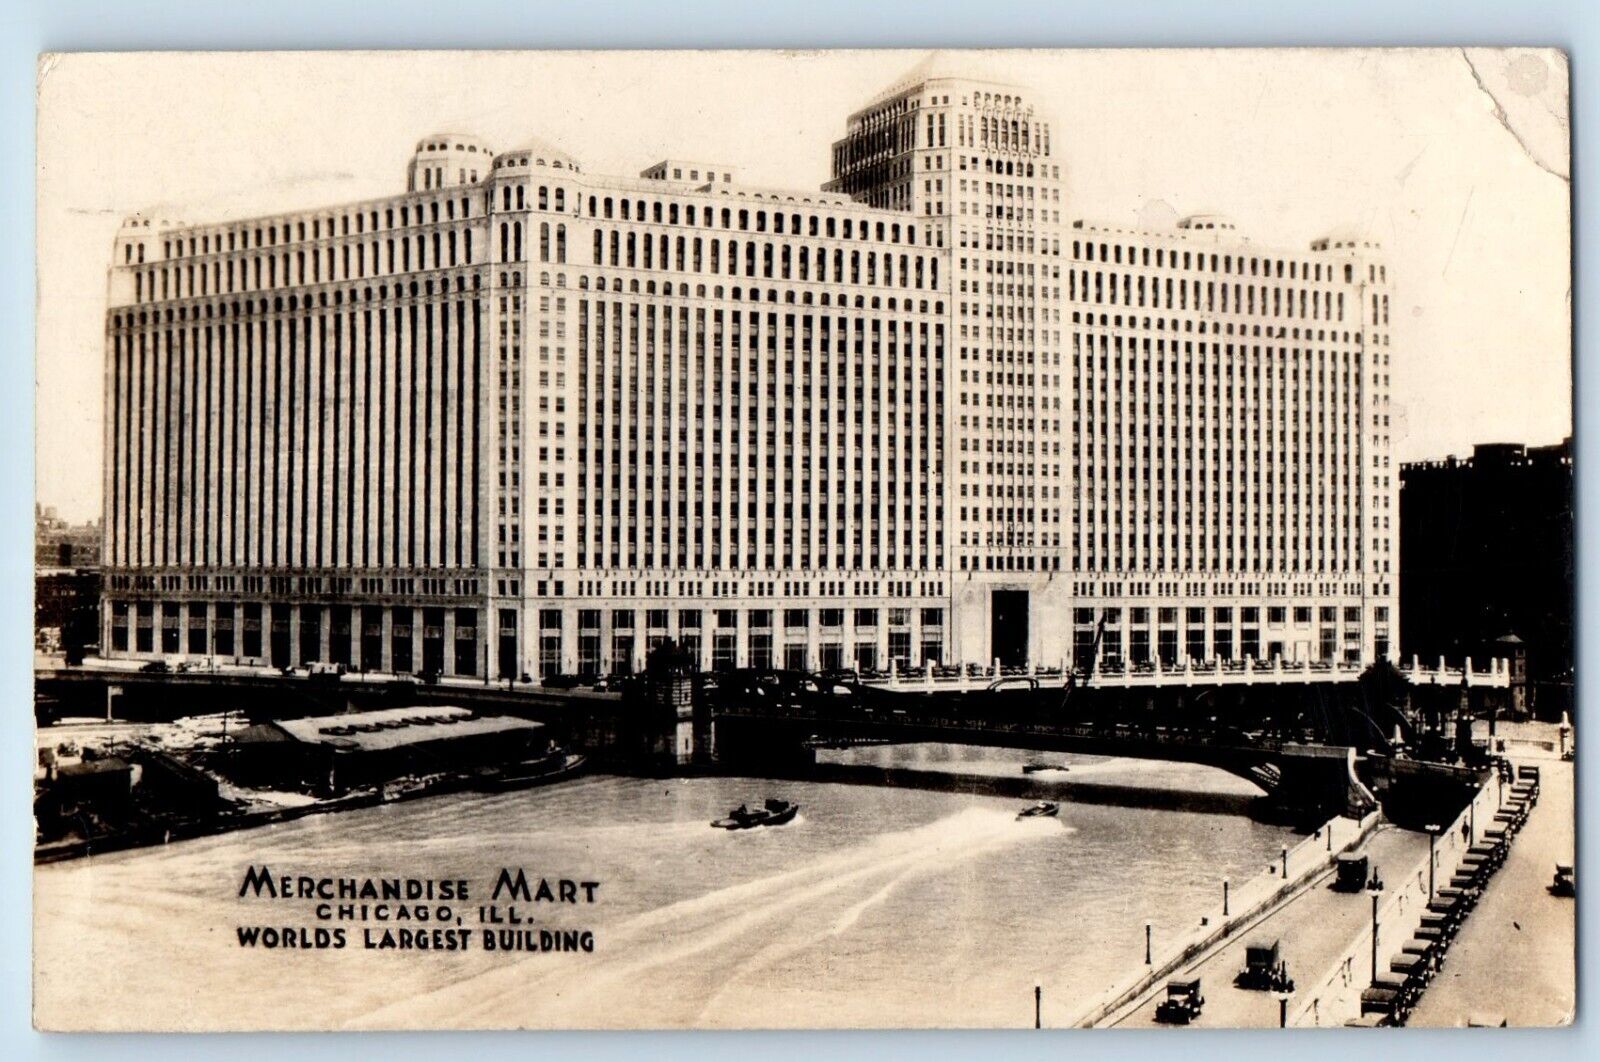 Chicago IL Postcard RPPC Photo Merchandise Mart Worlds Largest Building 1932